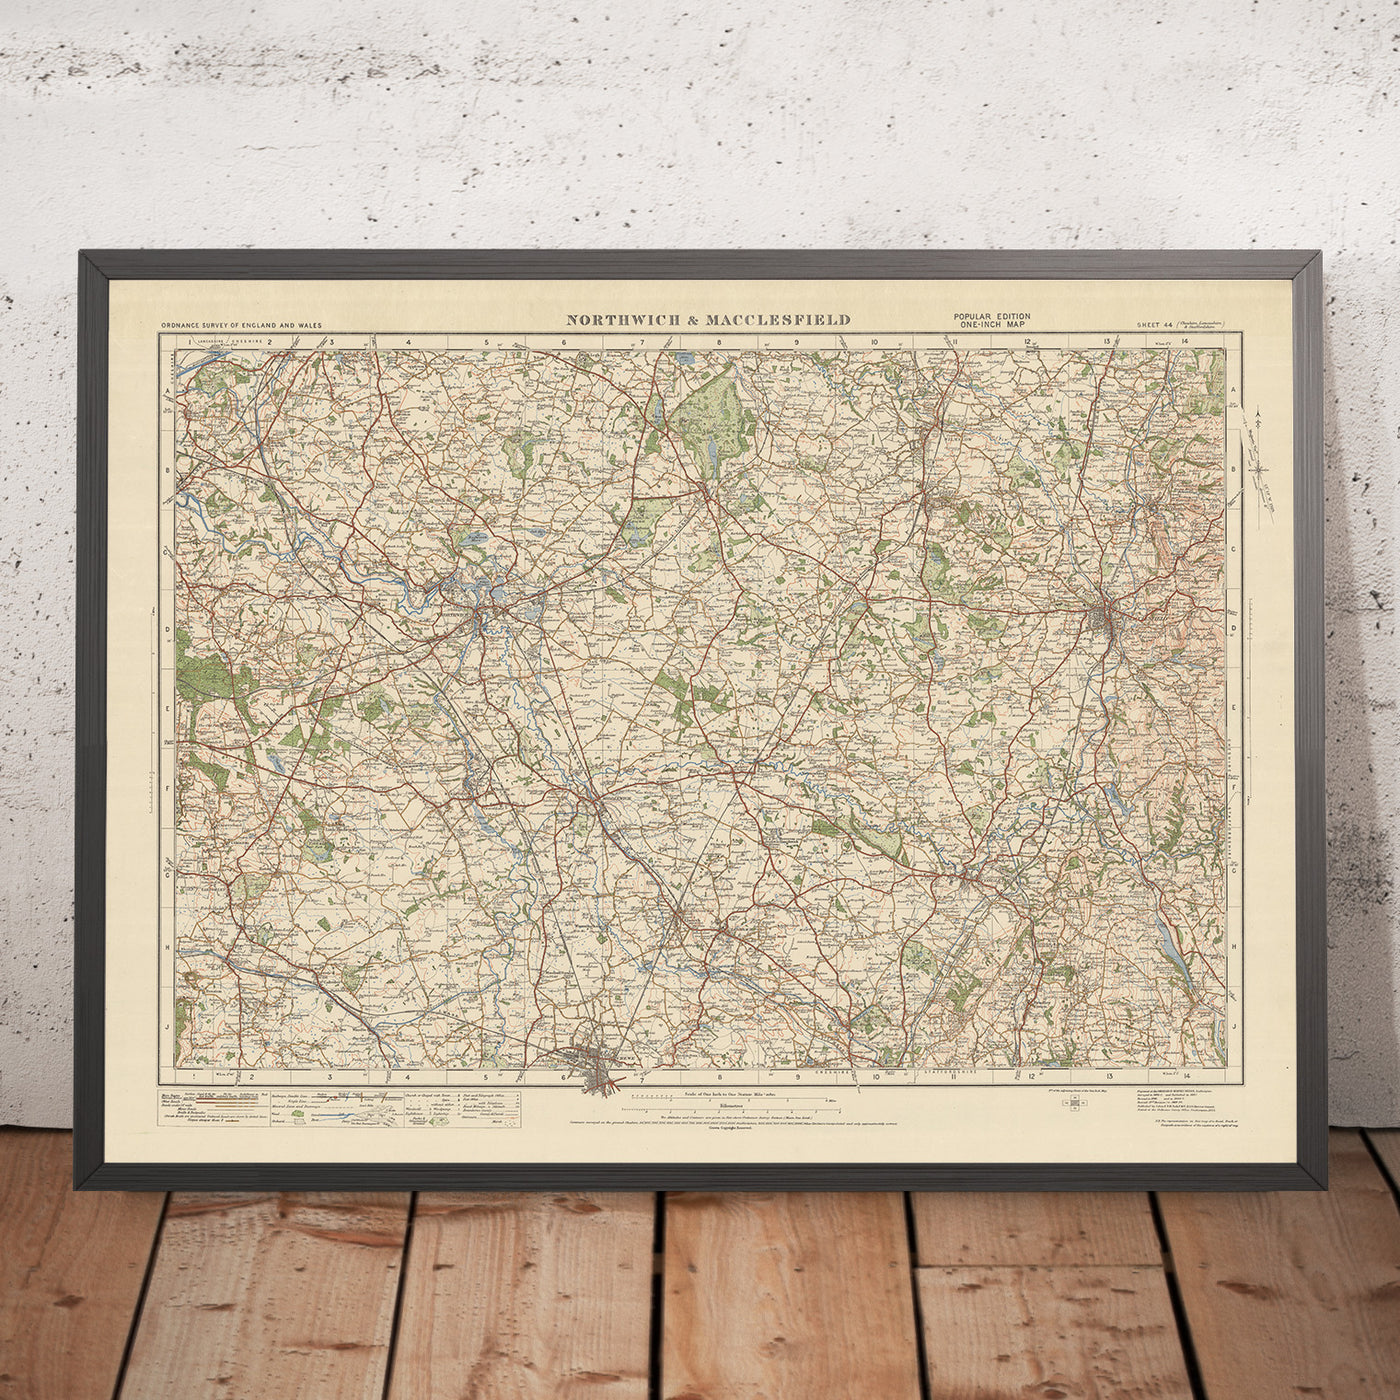 Old Ordnance Survey Map, Blatt 44 – Northwich & Macclesfield, 1925: Knutsford, Crewe, Macclesfield, Wilmslow, Winsford